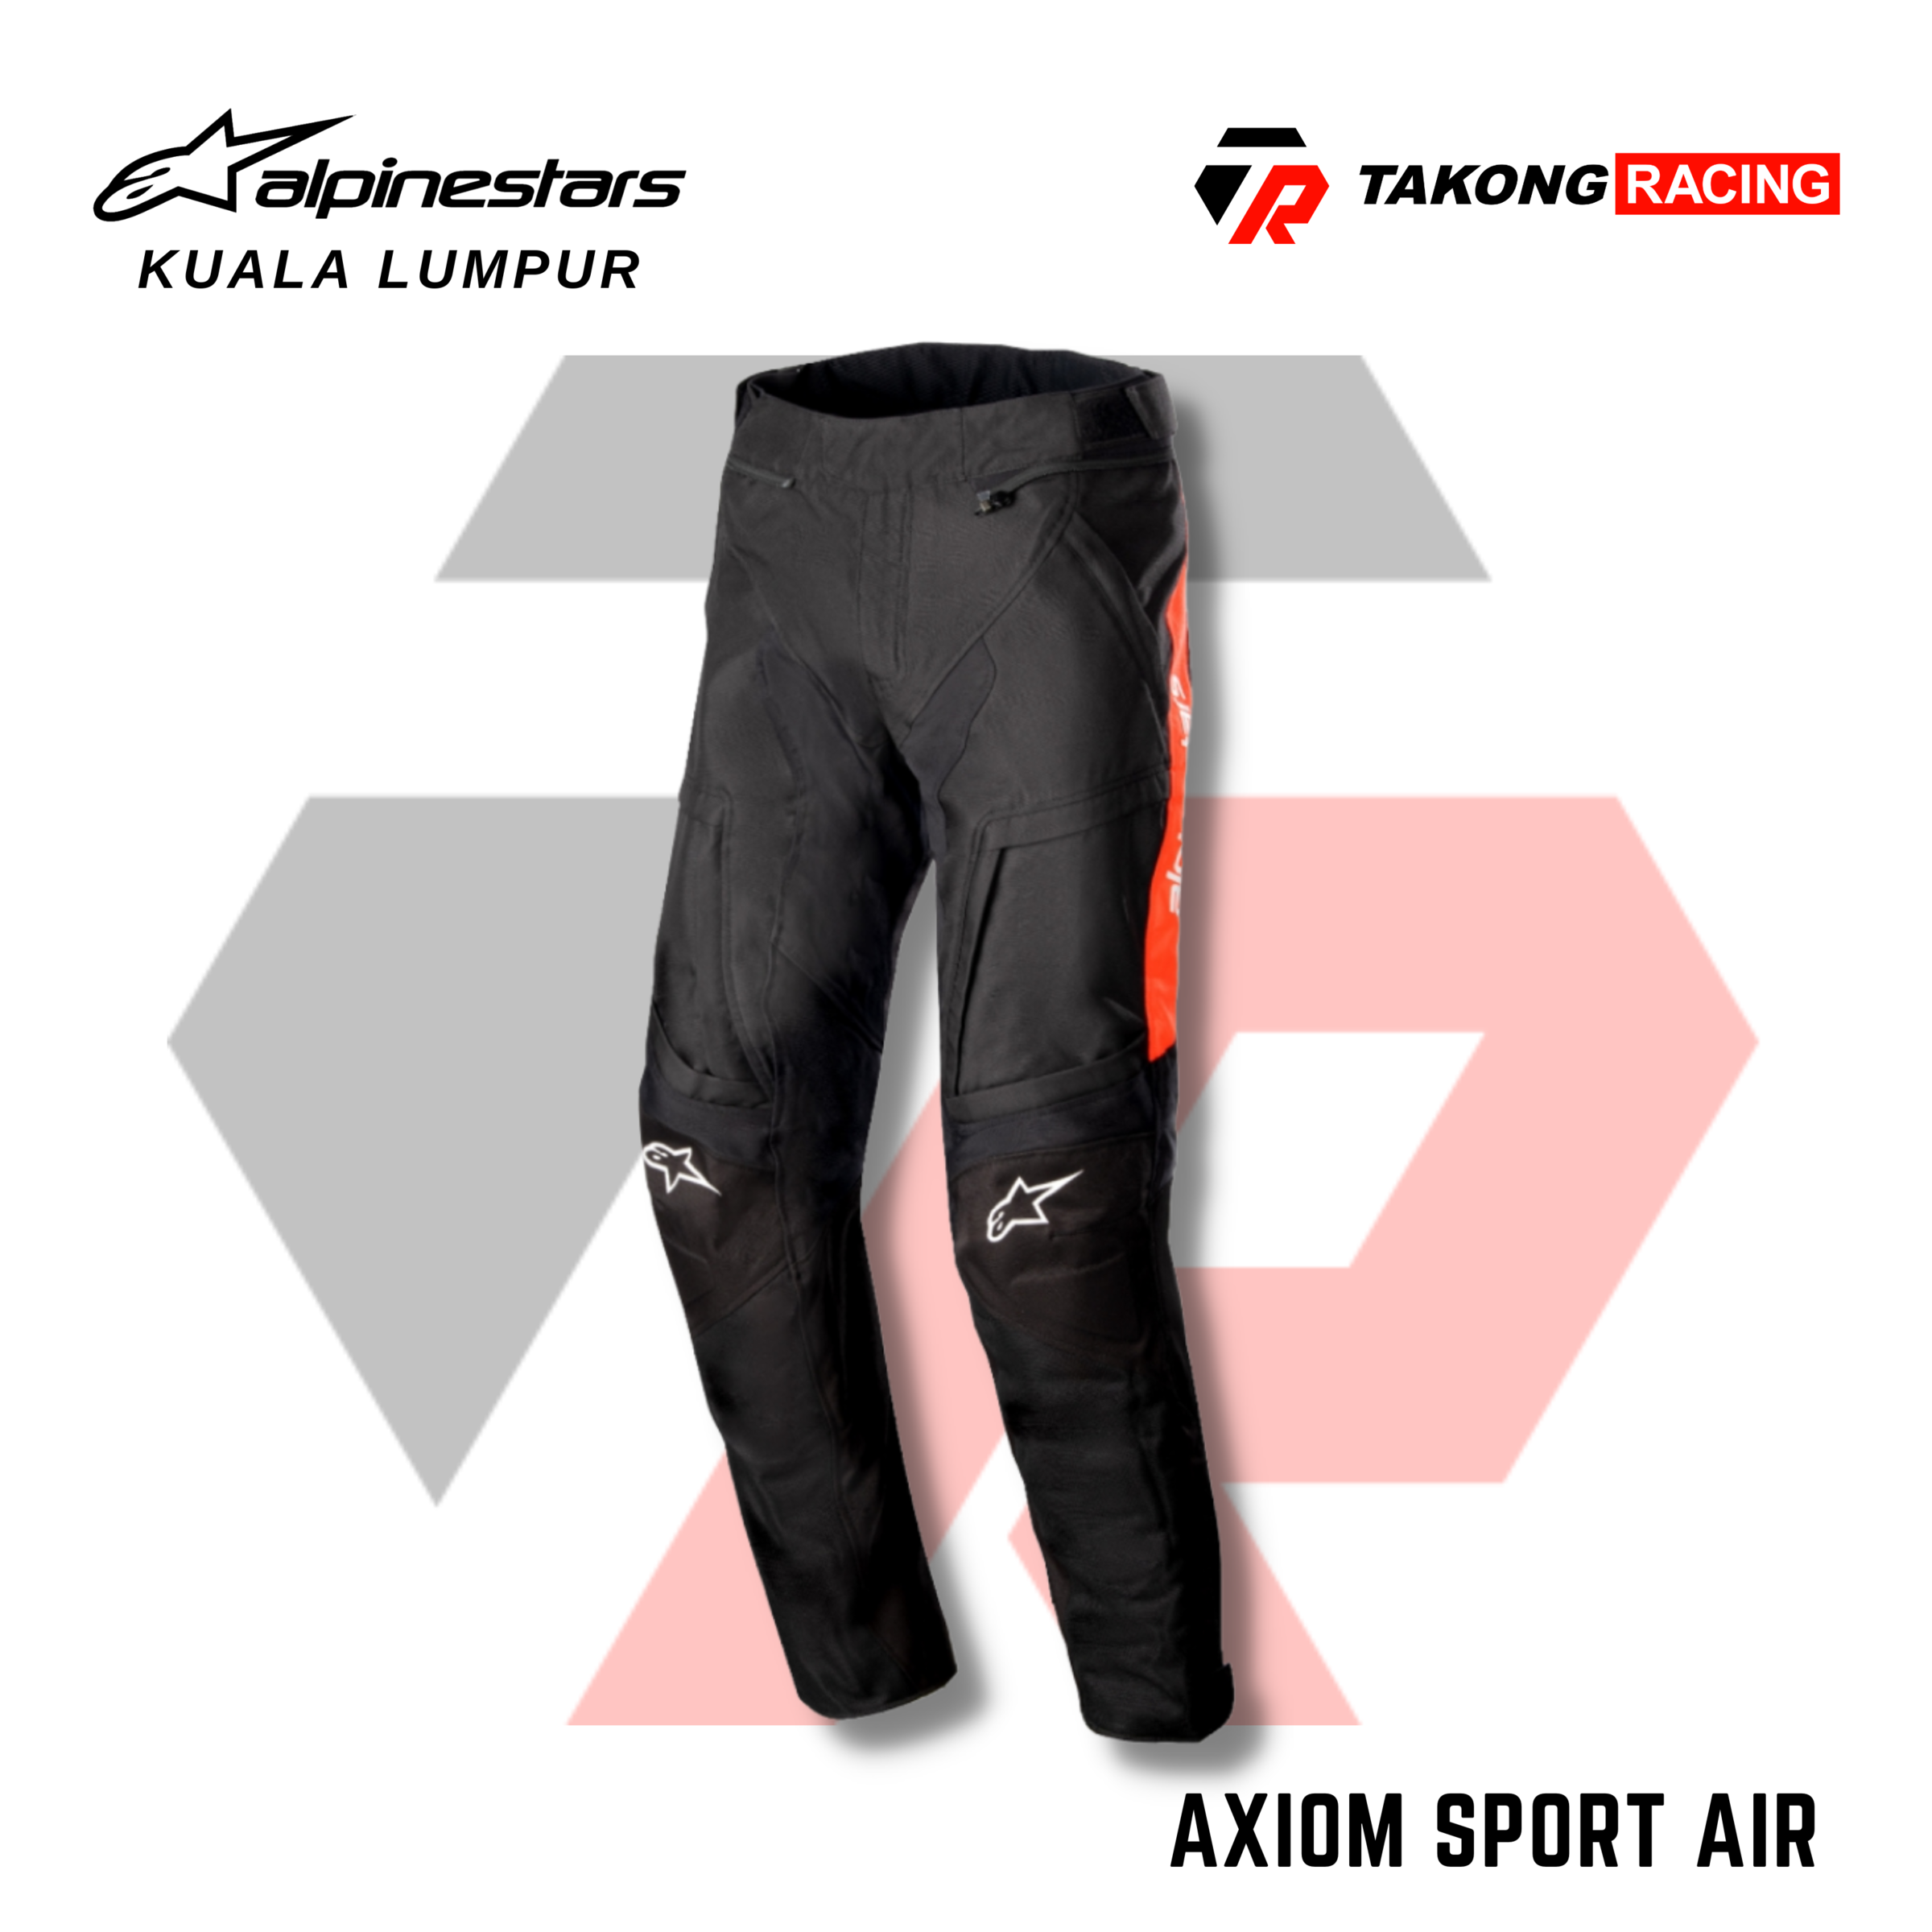 Alpinestars Axiom Sport Air Pant (Asia Fit) – Takong Racing (Riding Apparel)